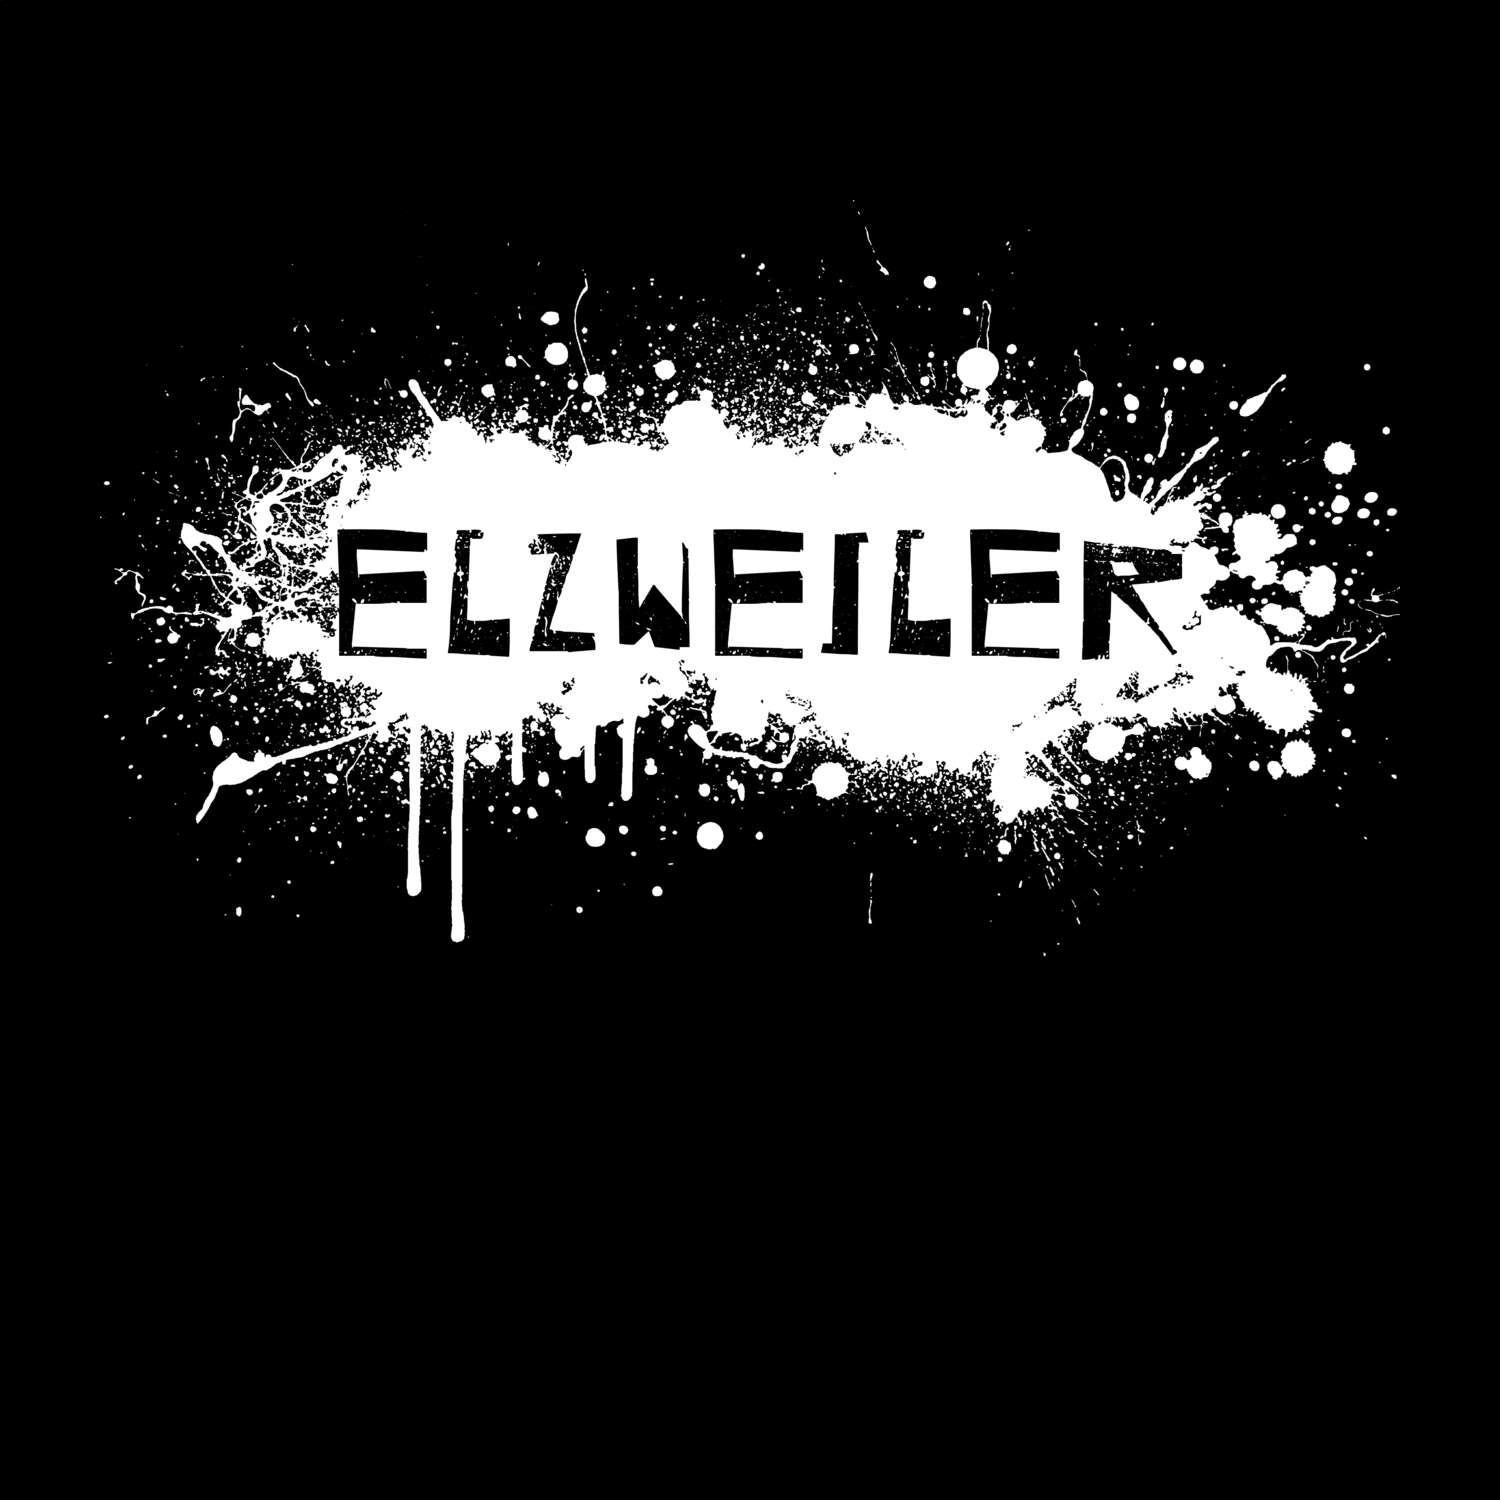 Elzweiler T-Shirt »Paint Splash Punk«